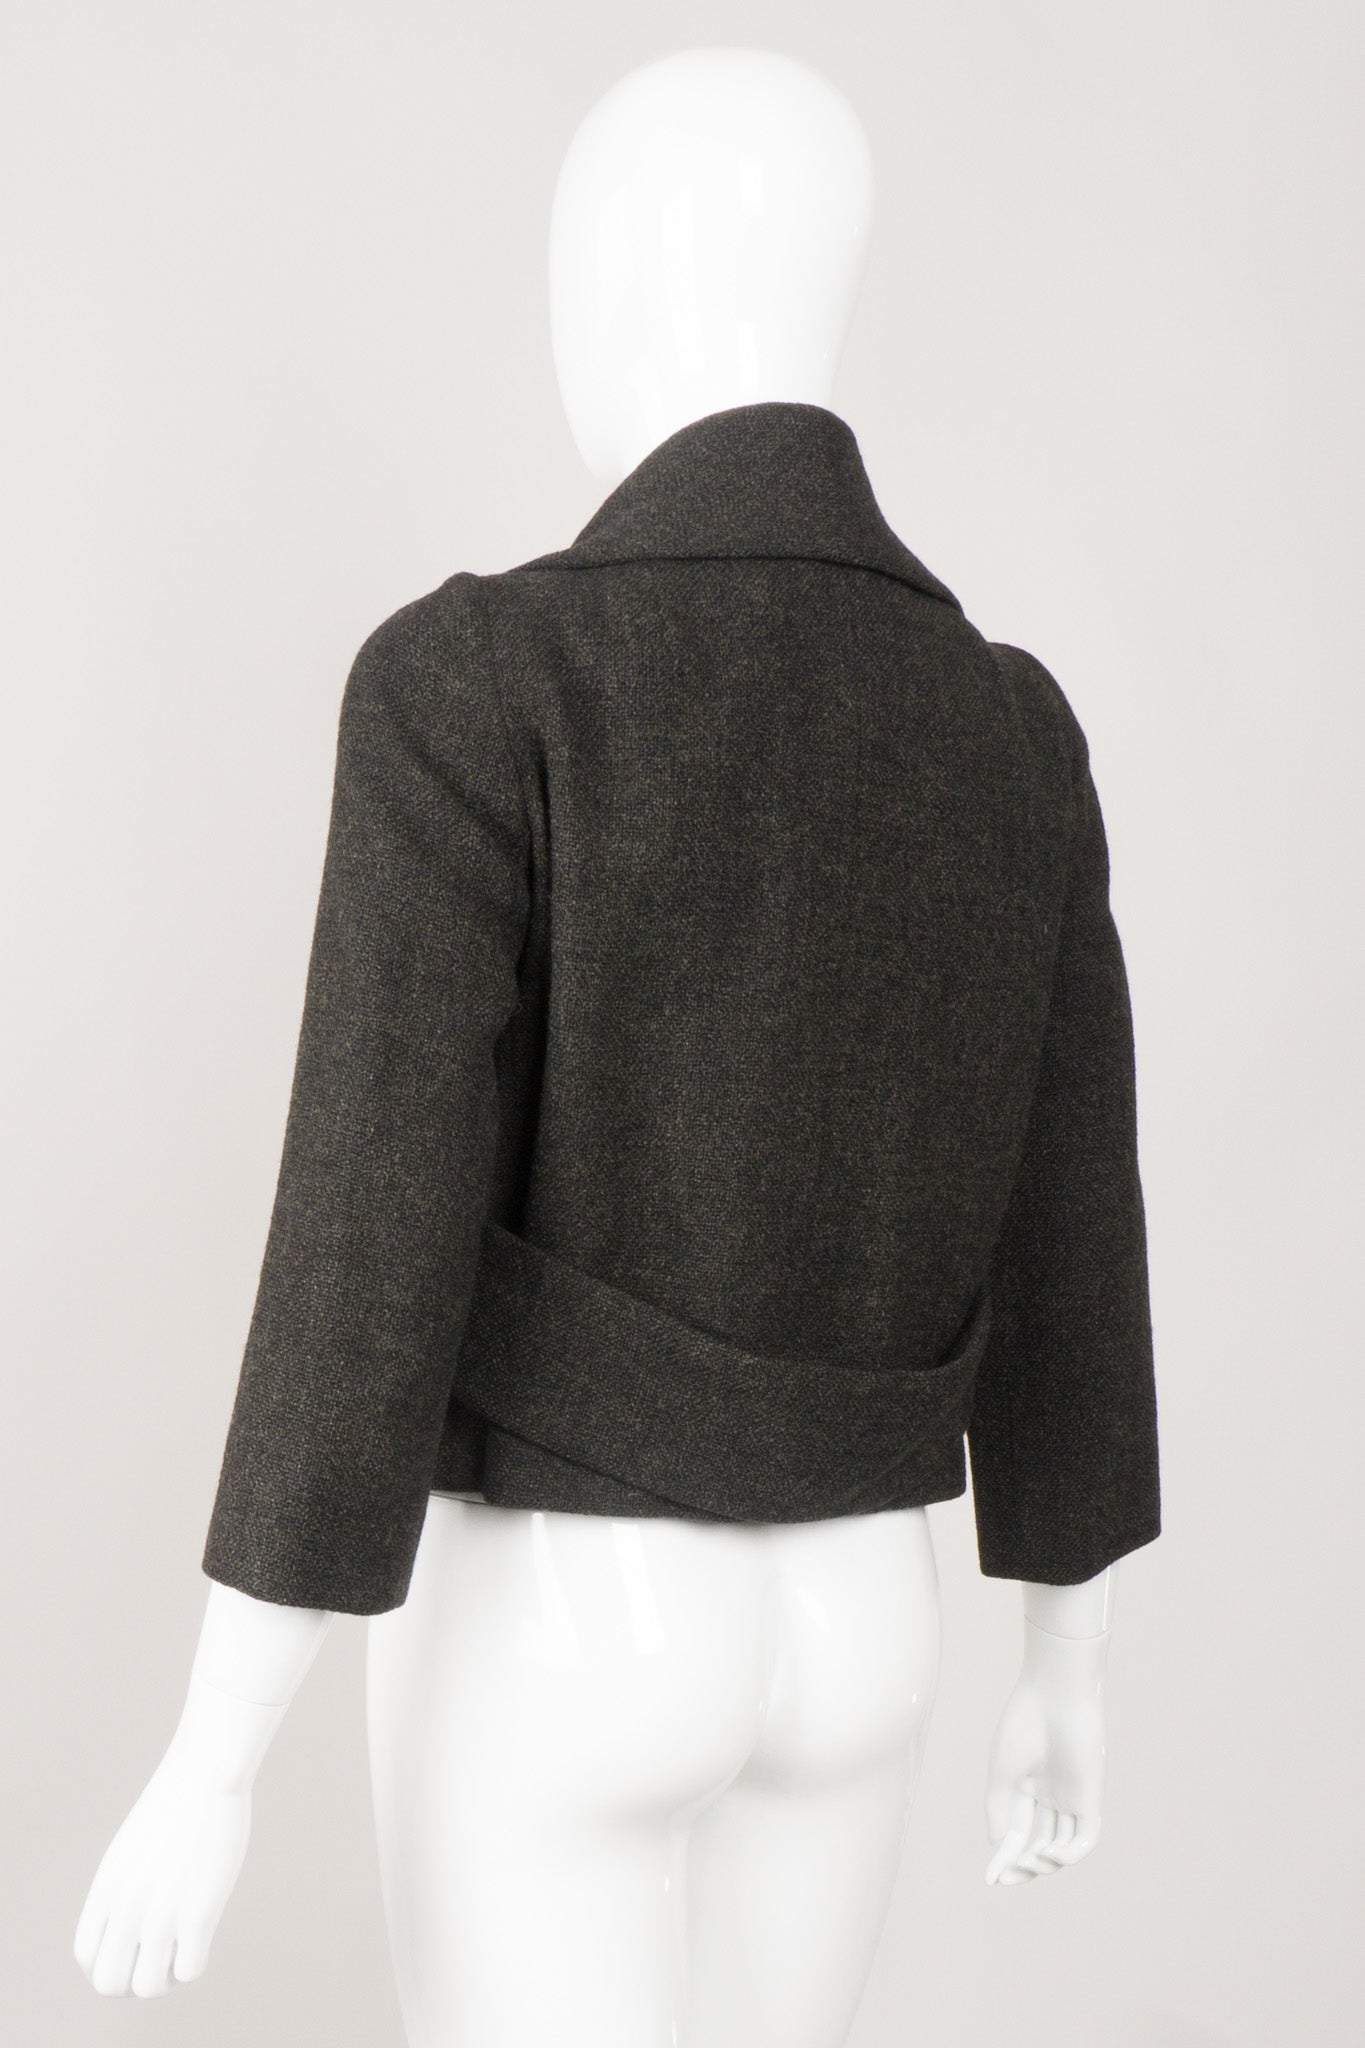 Christian Dior Vintage Boxy Tweed Jacket & Skirt Suit Set